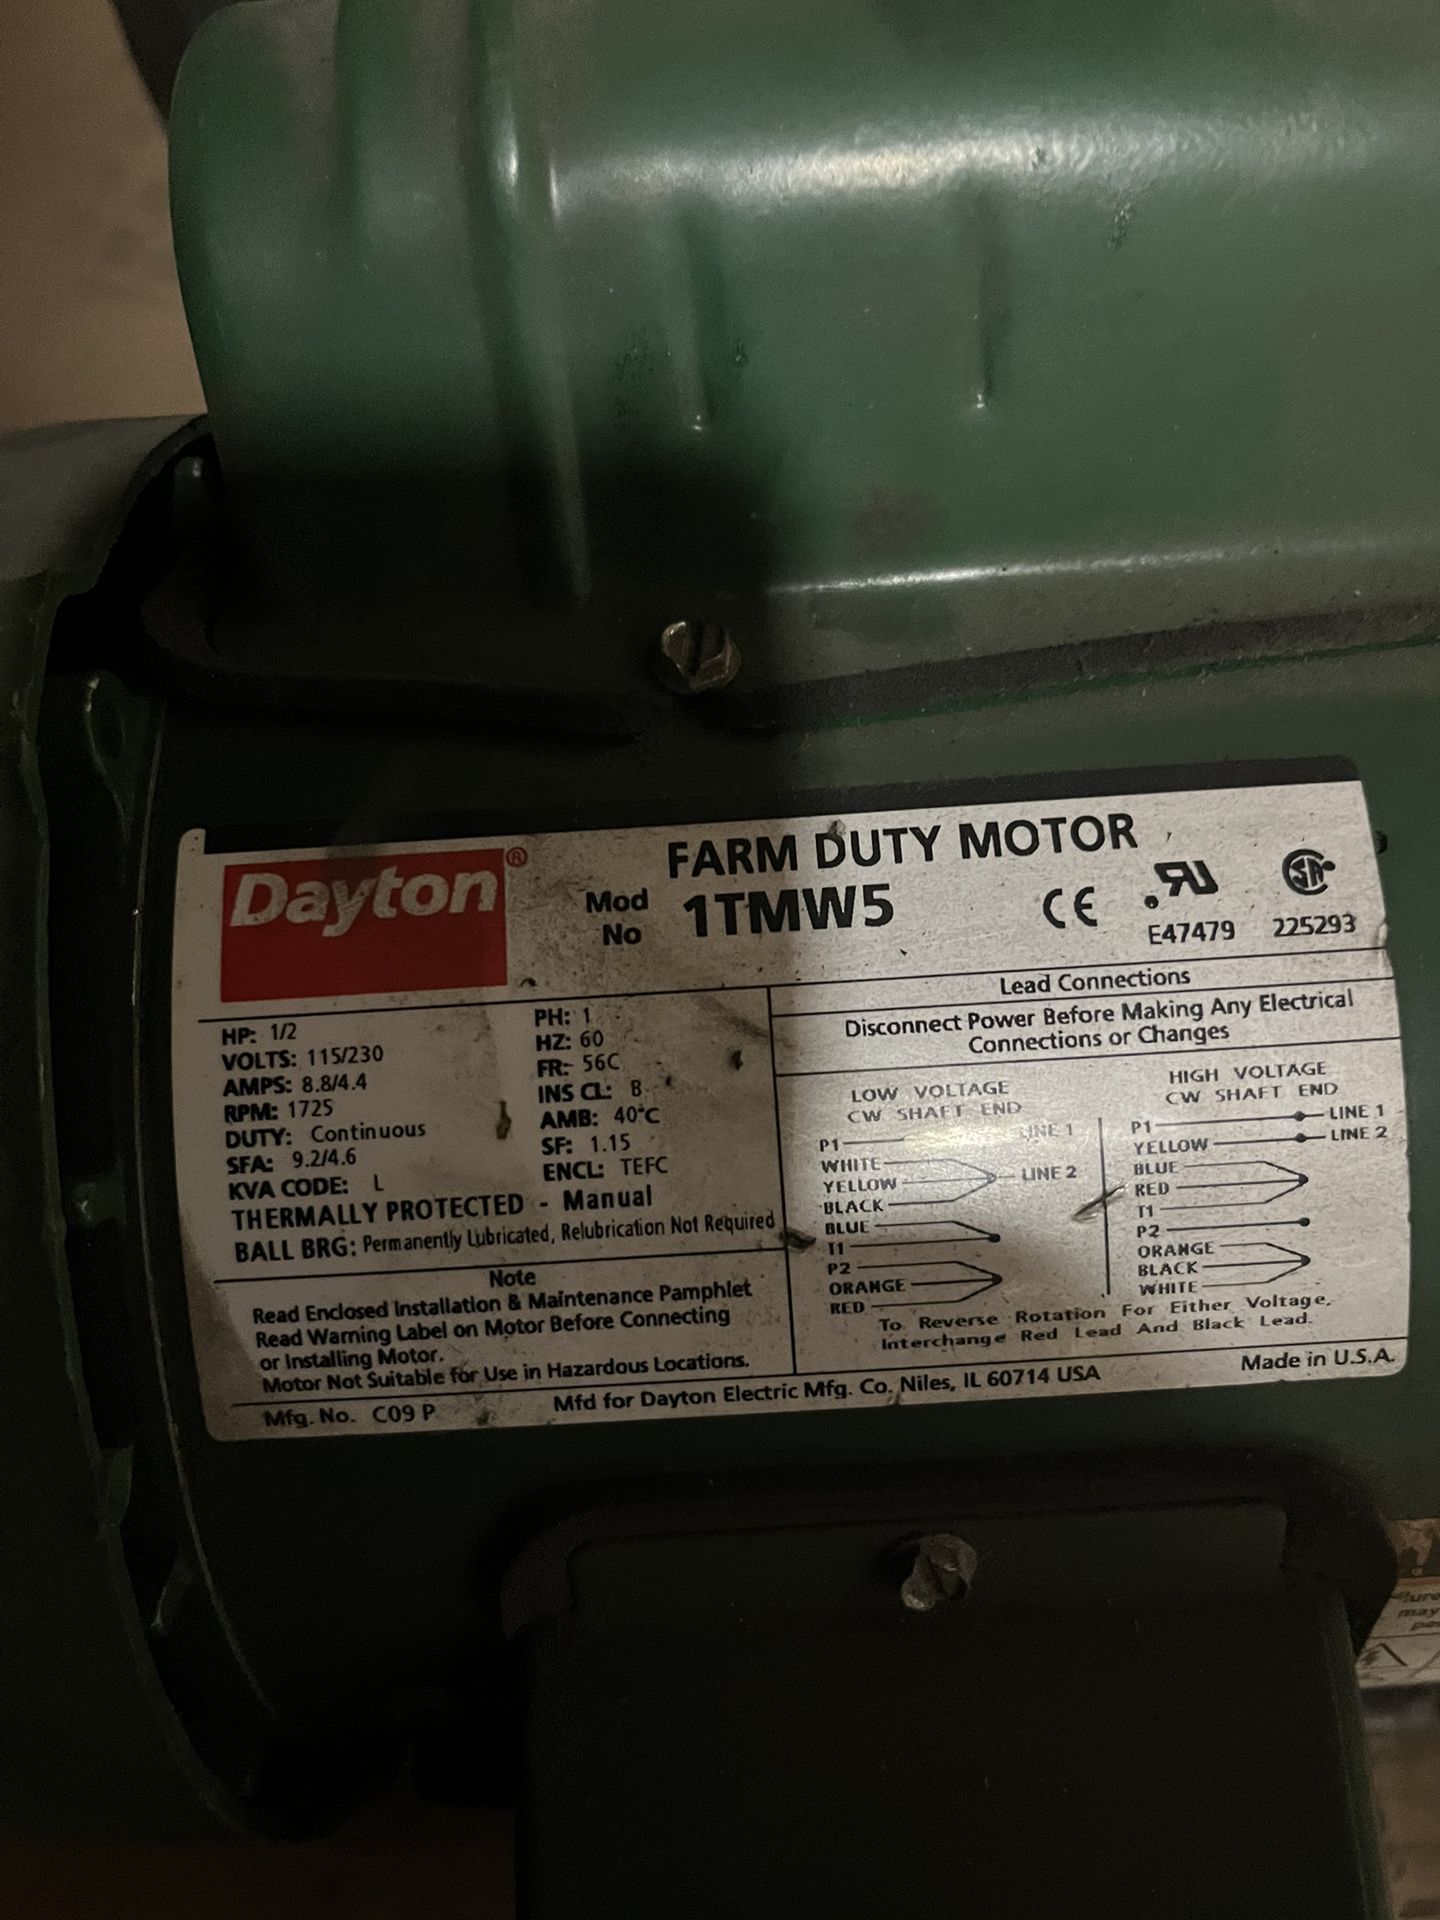 Dayton 1Tmw5 Capacitor-Start High Torque Farm Duty Motor, 1/2 Hp, 115/230V Ac